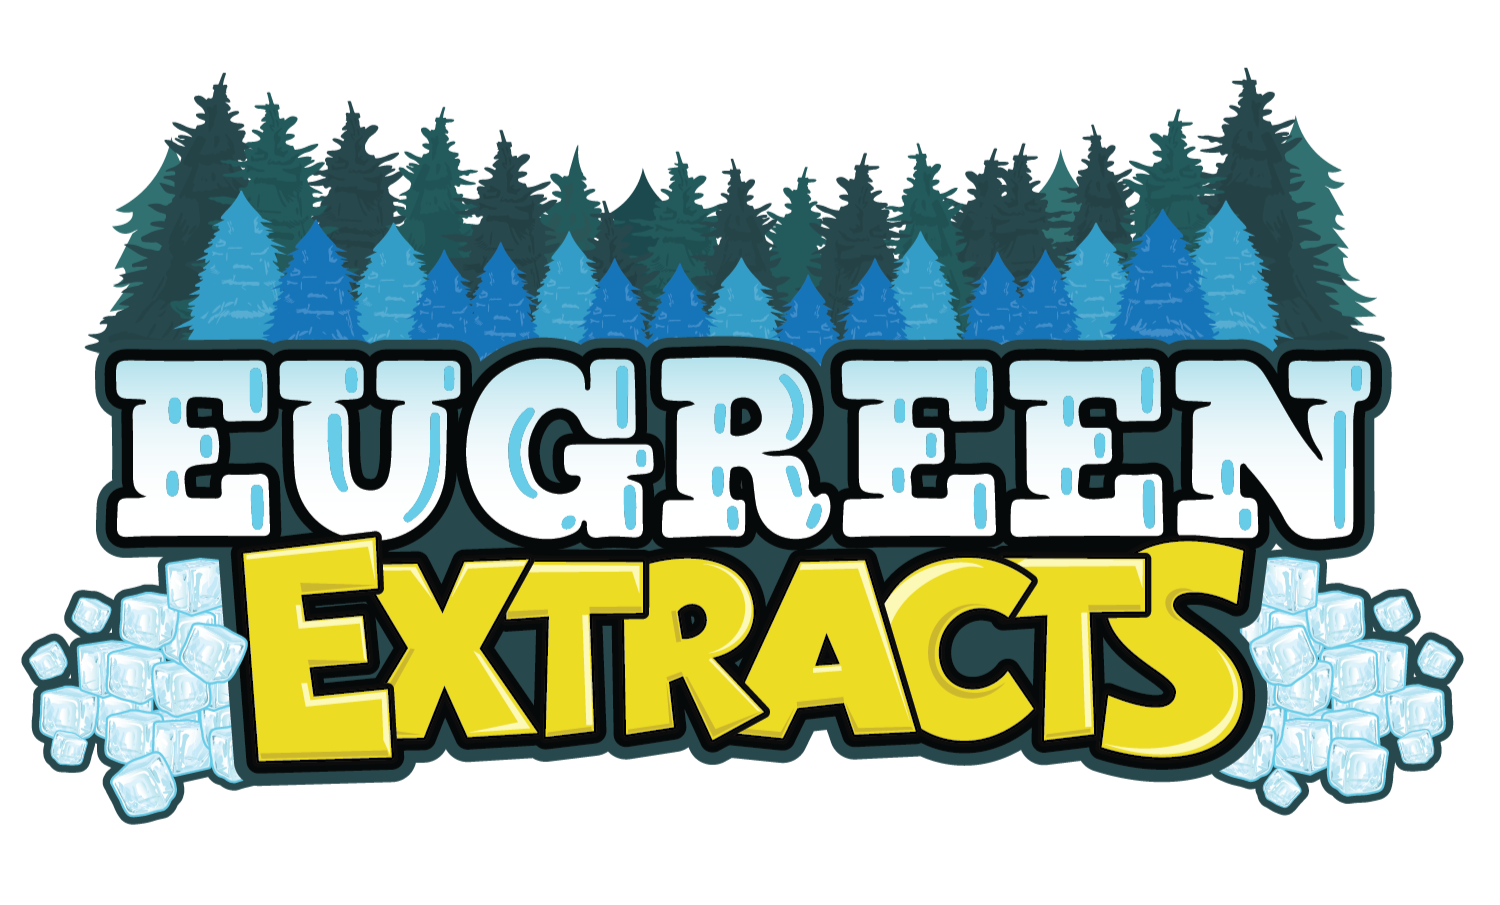 Eugreen Extracts